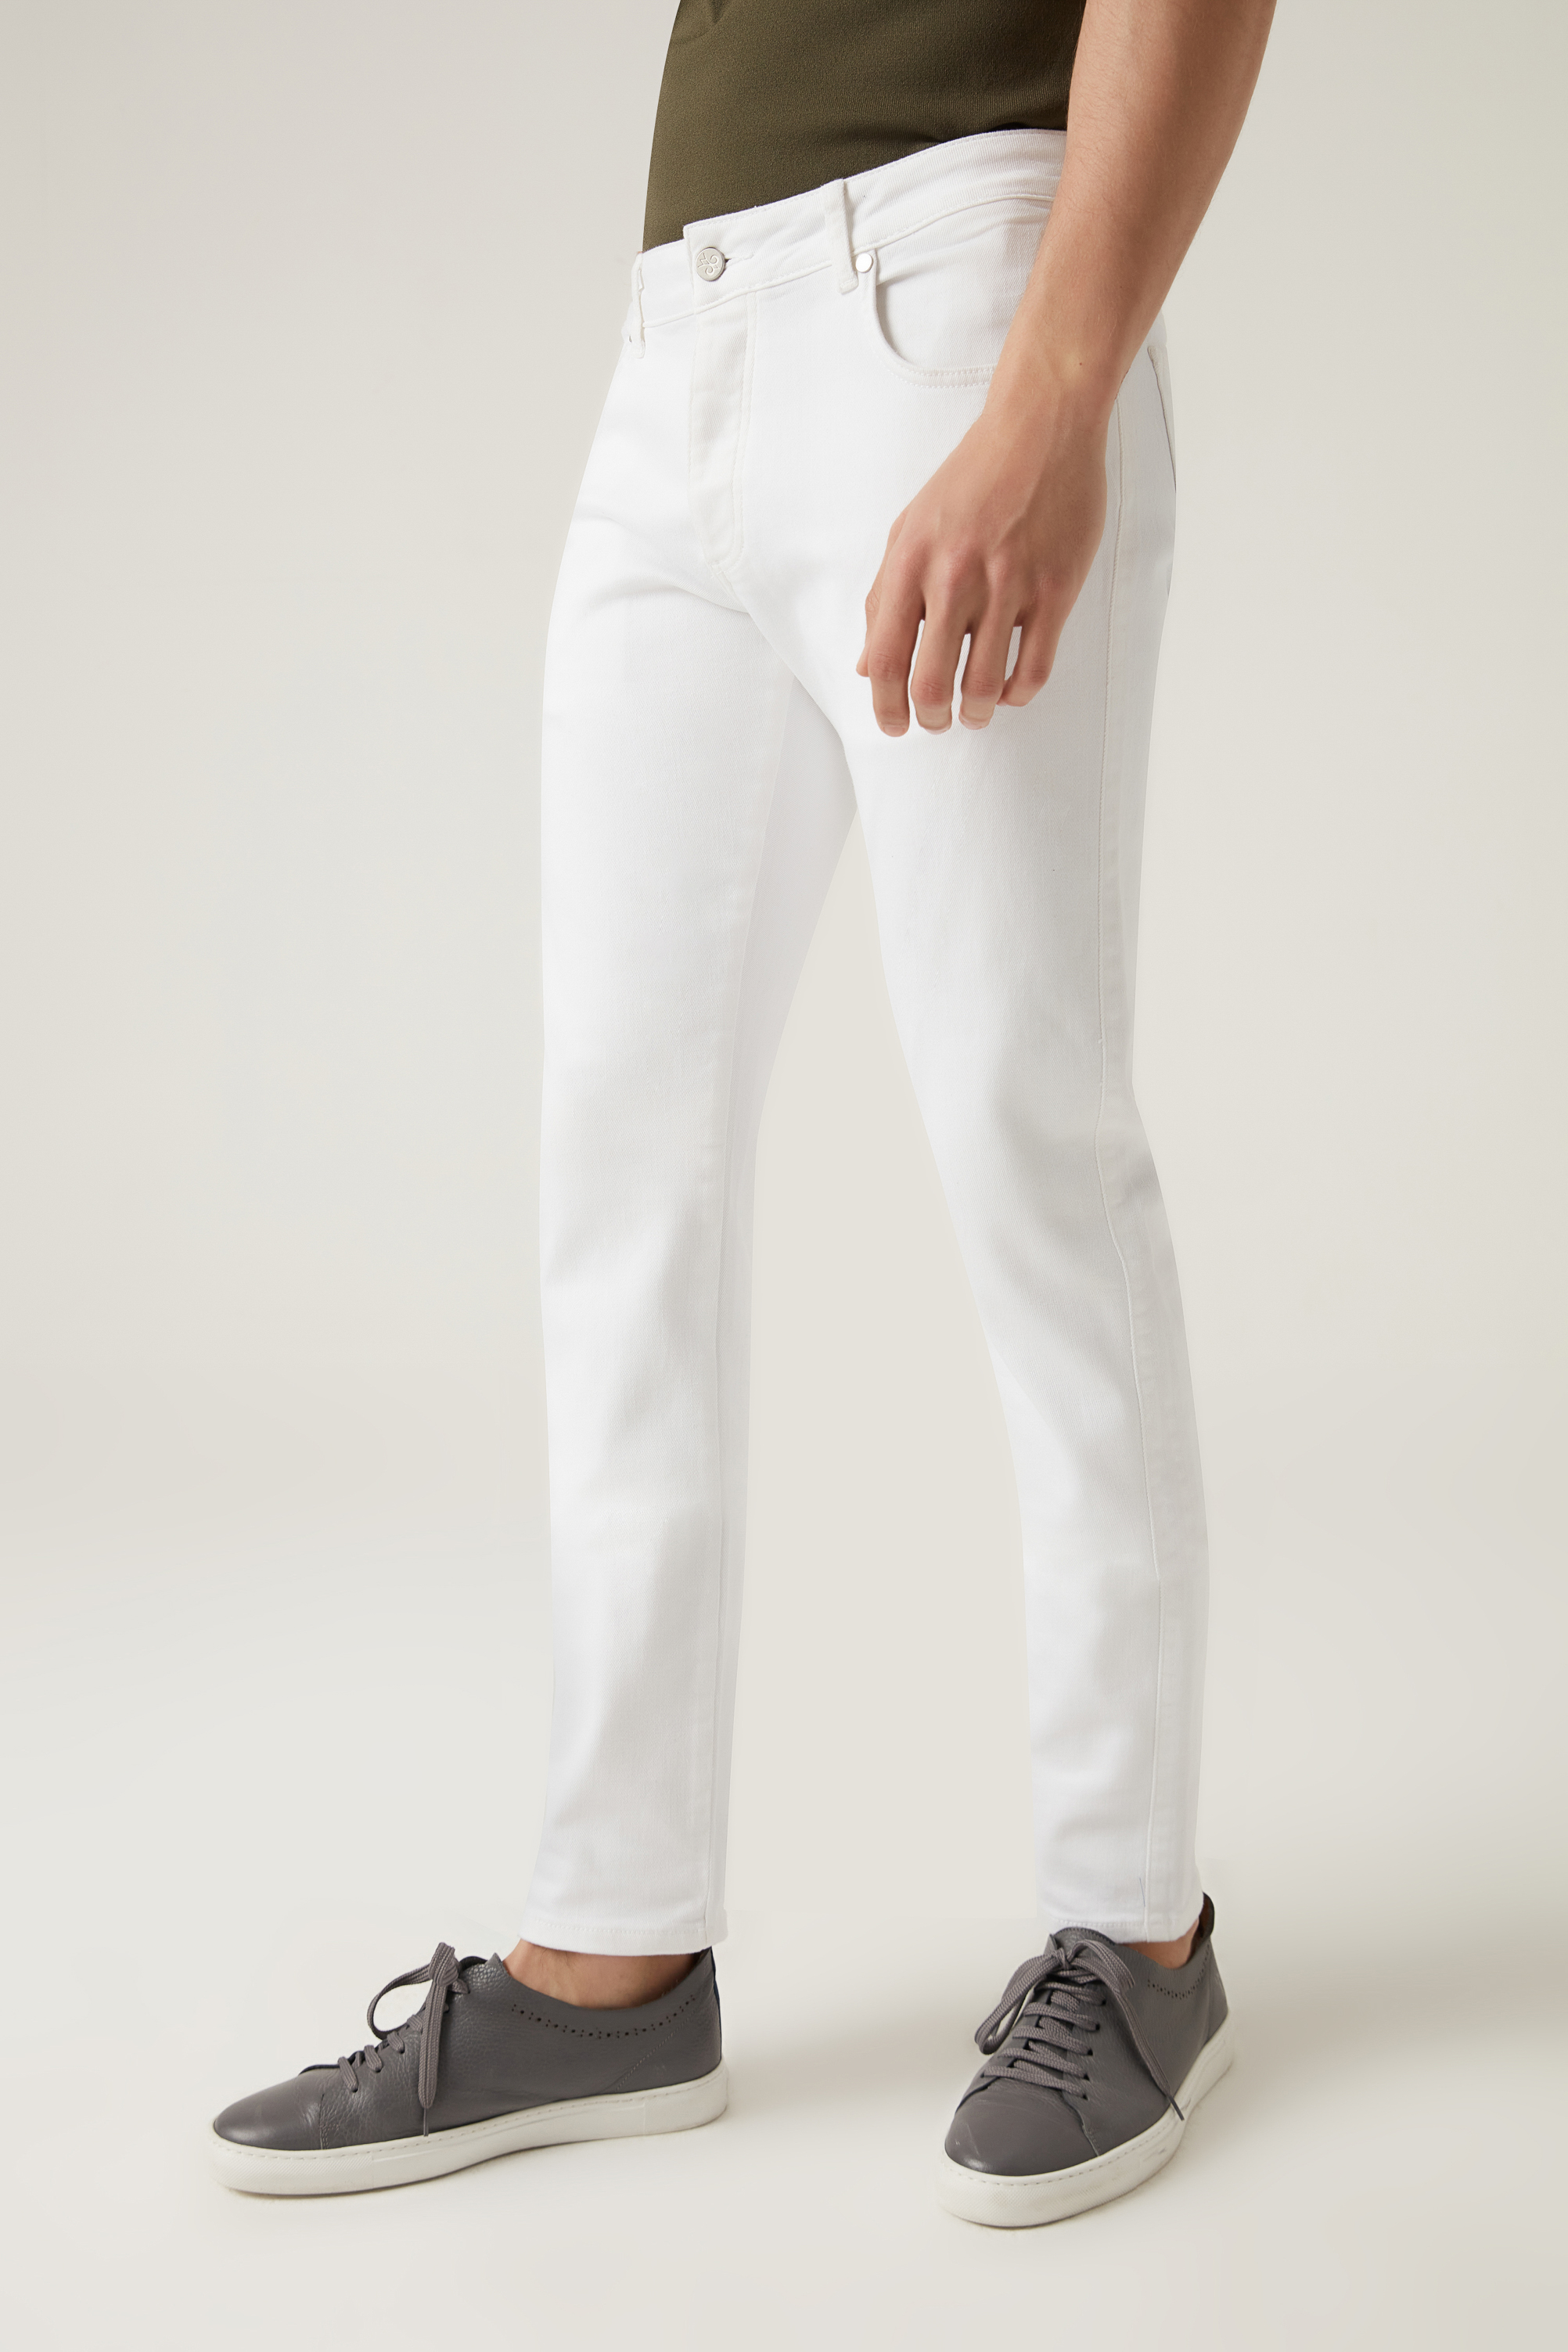 Damat Tween Damat Slim Fit Beyaz Denim Pantolon. 2